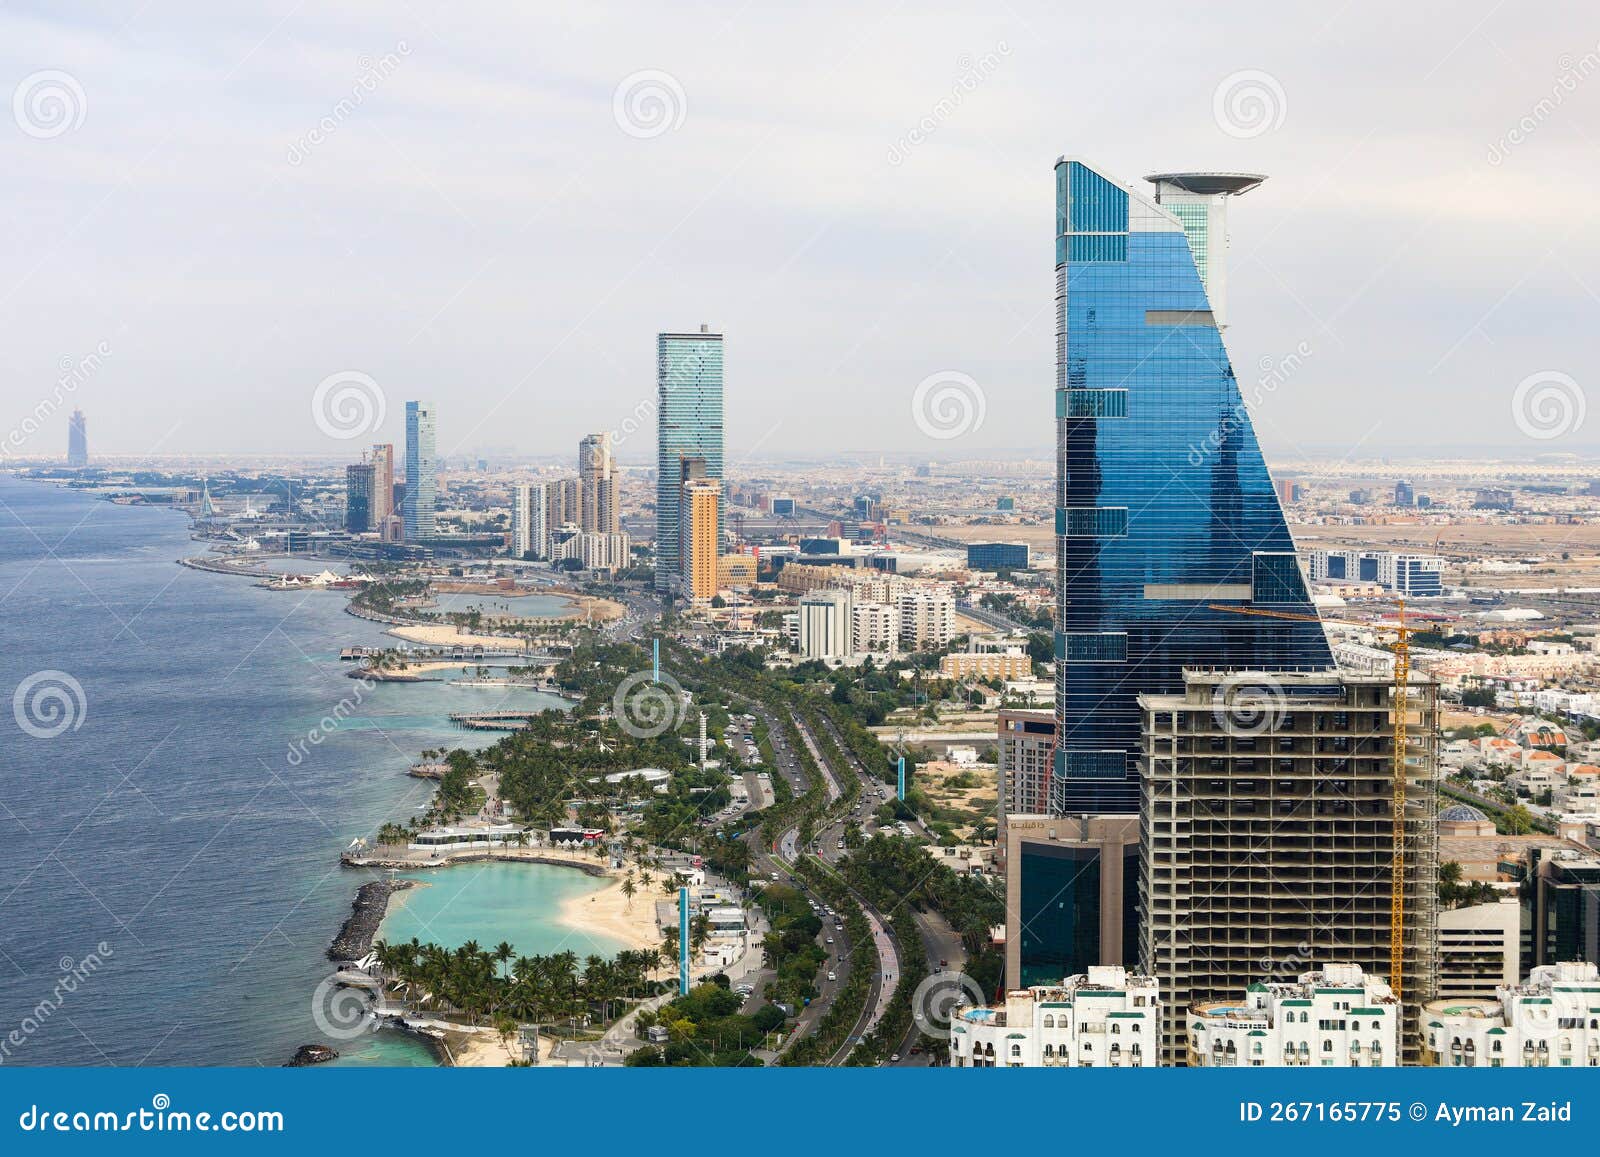 jeddahcity , saudi arabia - cityescape - a beautiful view of jeddah beach, waterfront city